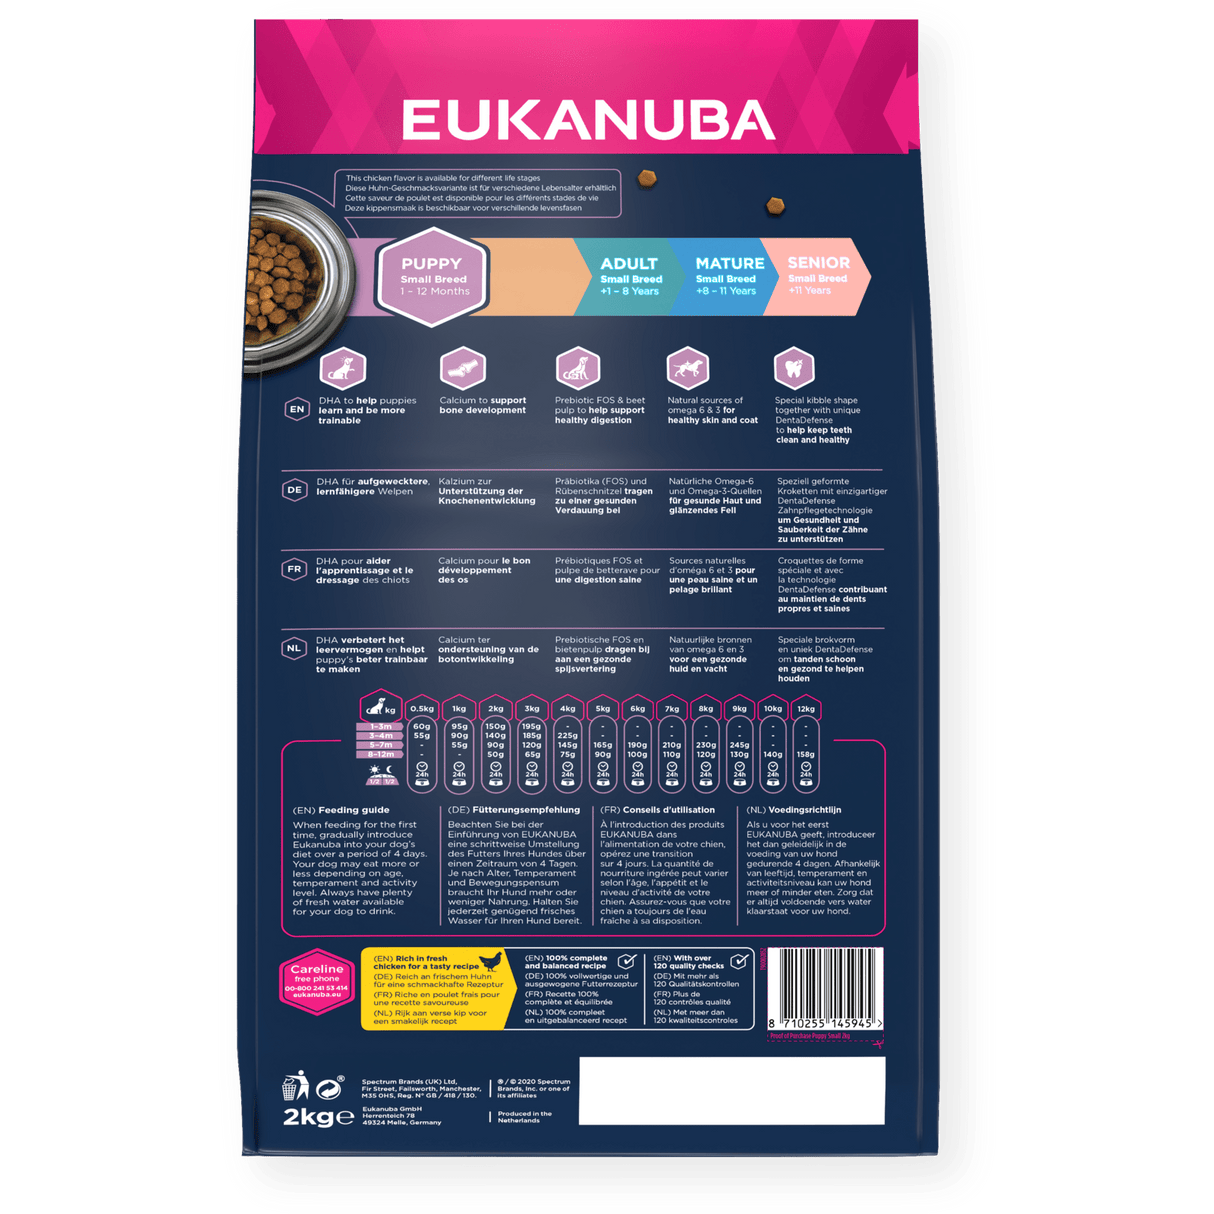 Eukanuba Puppy Small Breed Fresh Chicken Dry Dog Food 3x2kg, Eukanuba,